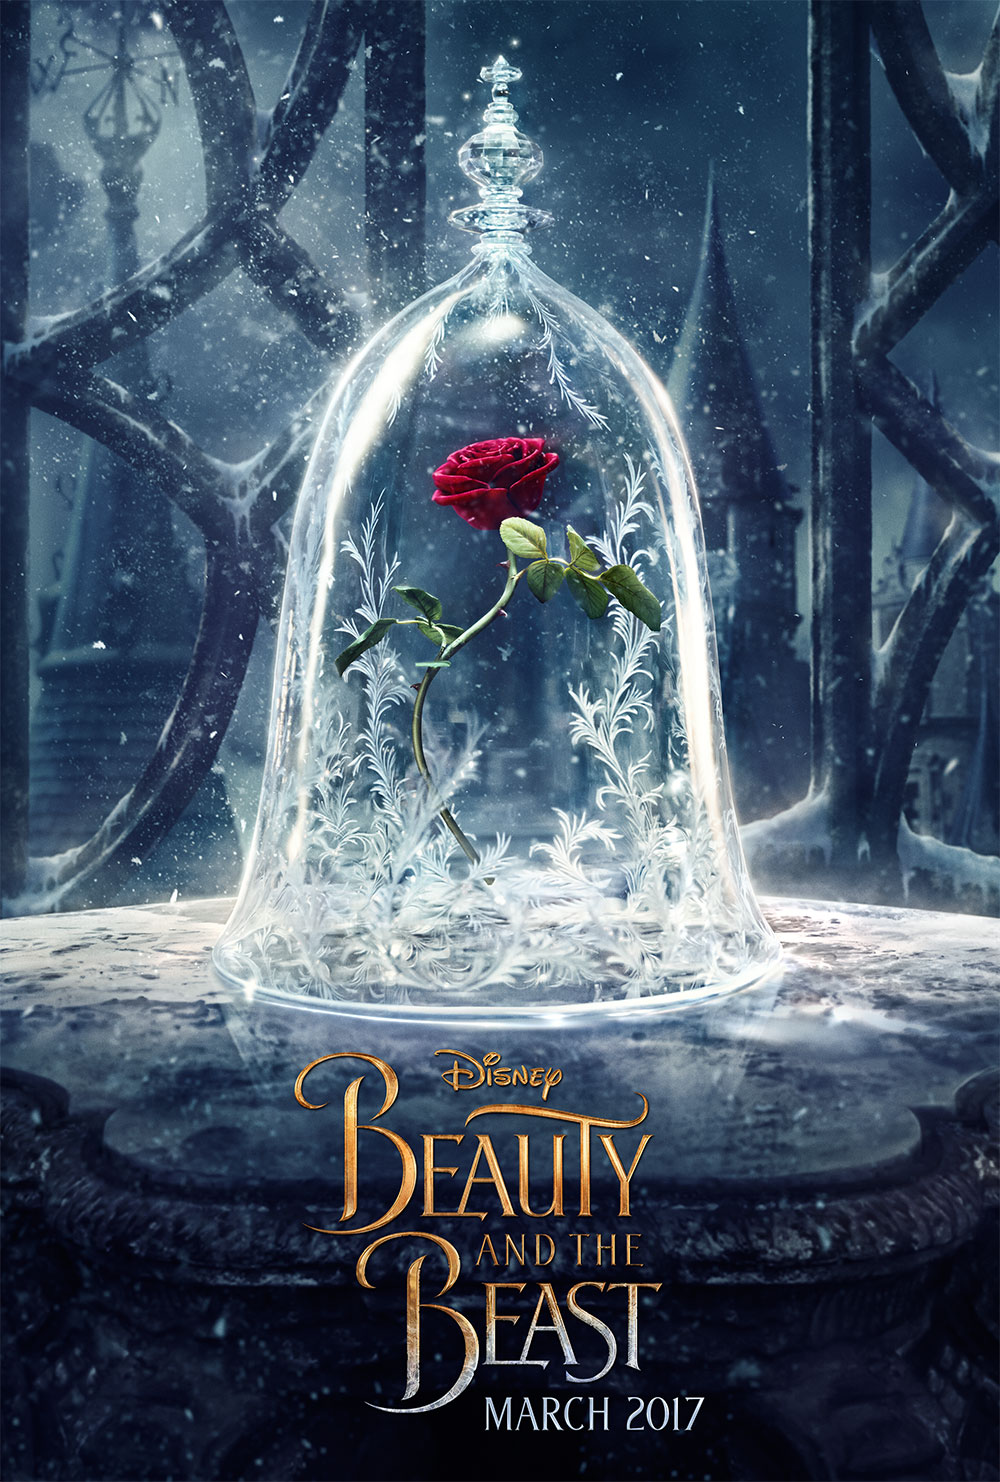 Disney’s Live Action “Beauty And The Beast” Bonus Sneak Peek!